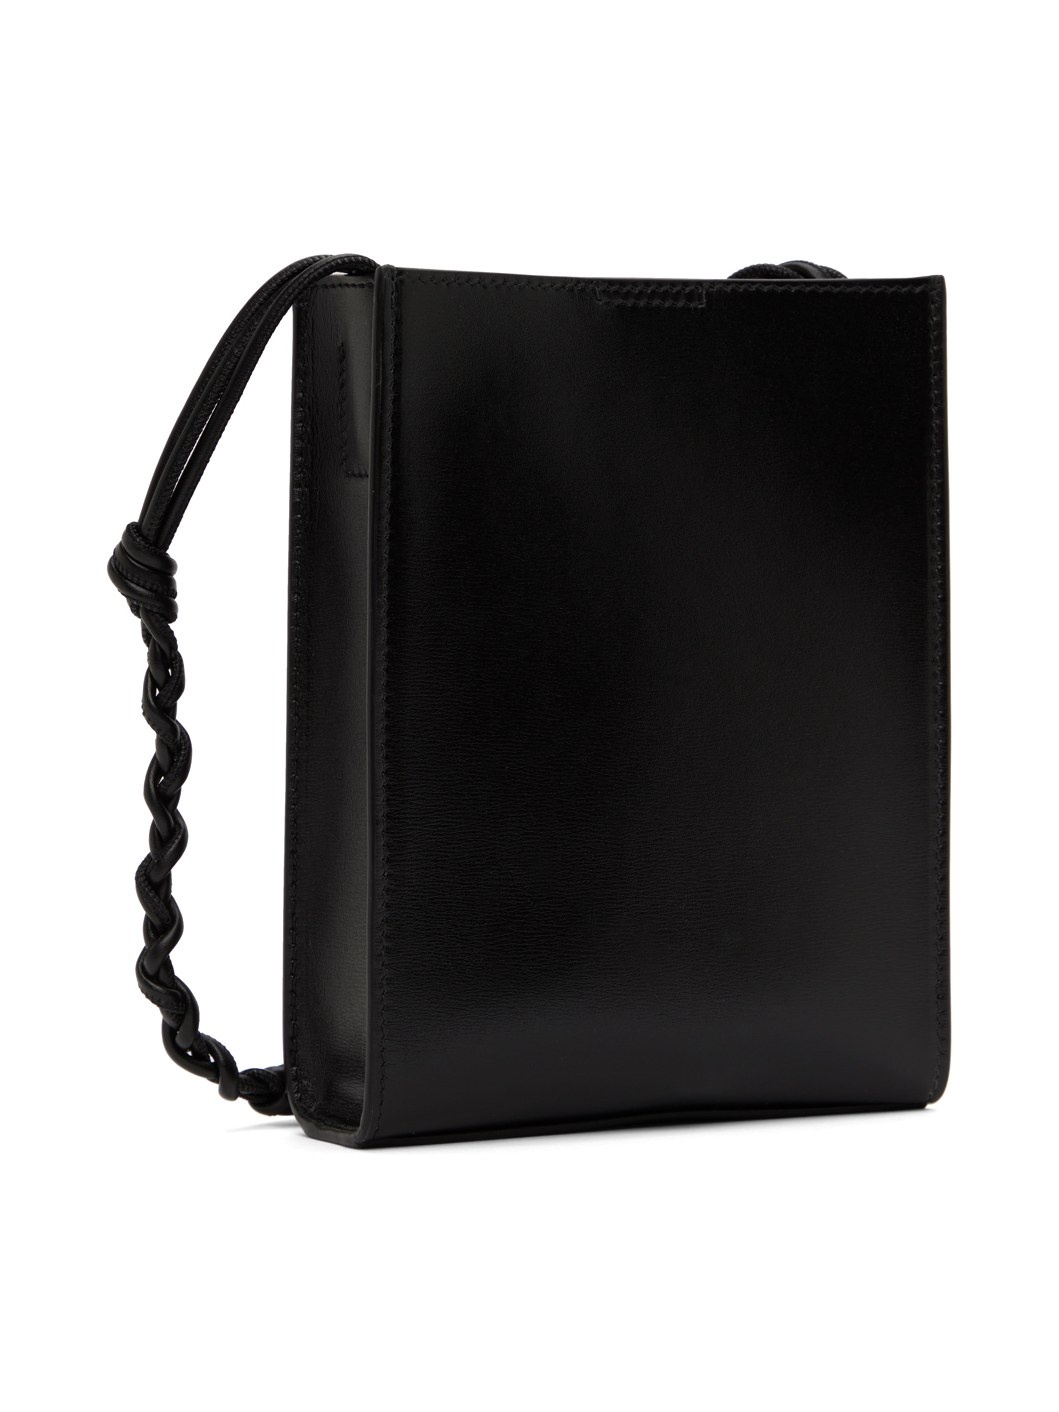 Black Small Tangle Shoulder Bag - 3